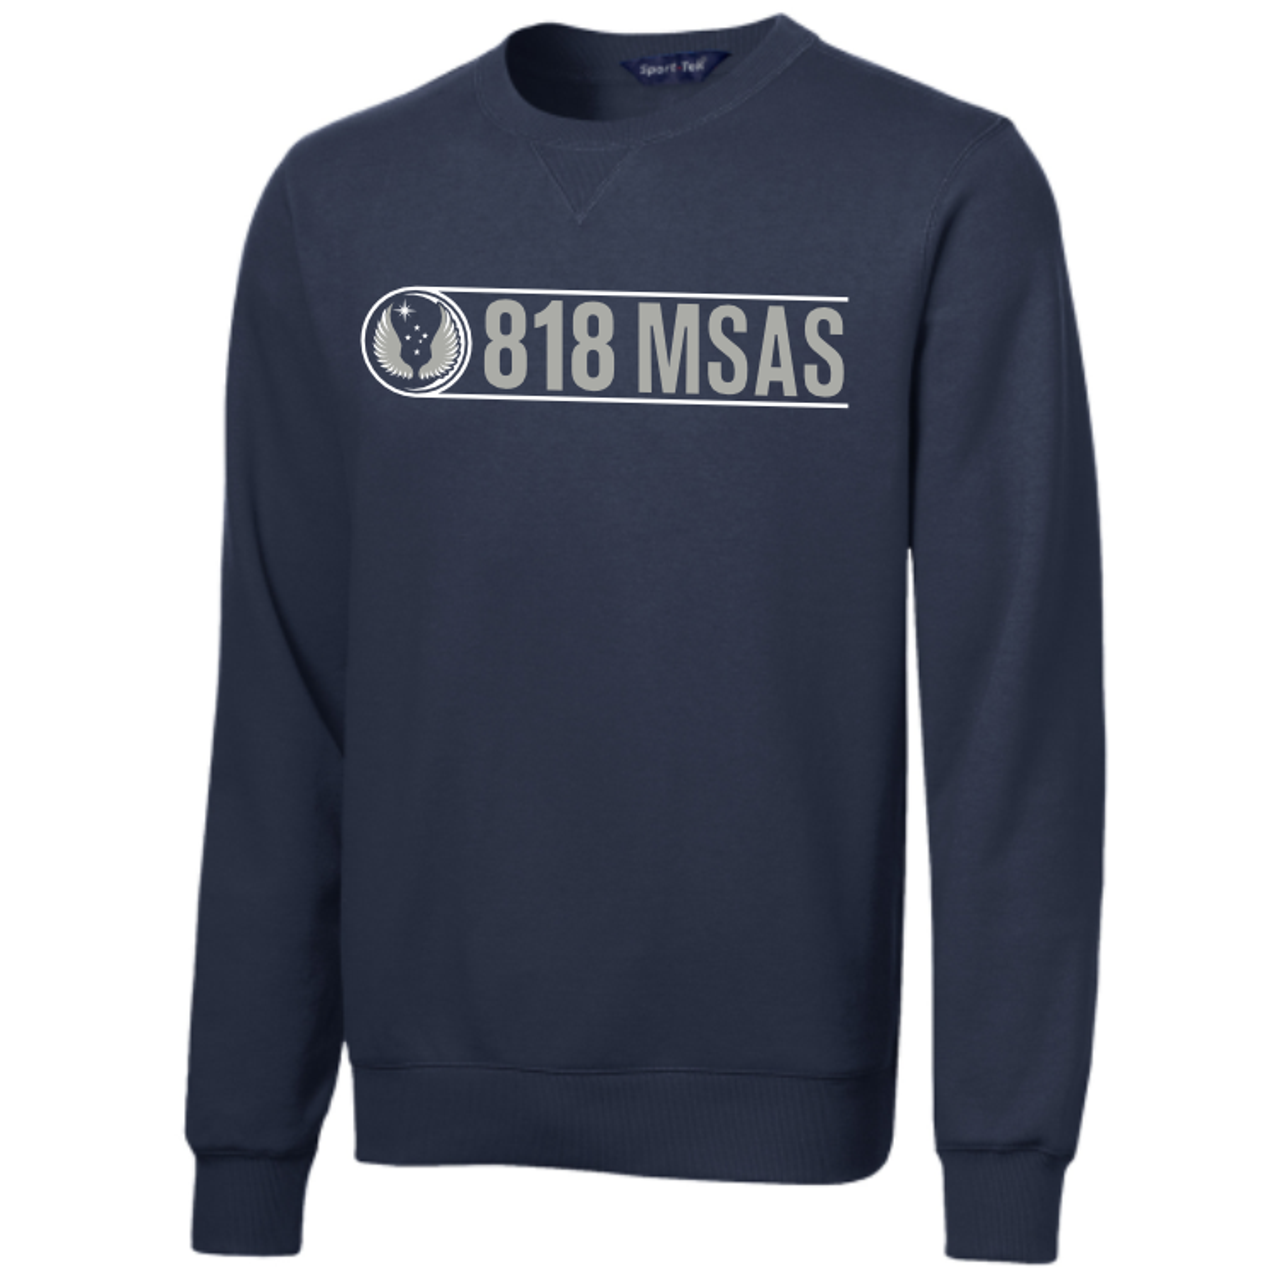 818 MSAS Crewneck Sweatshirt, Navy